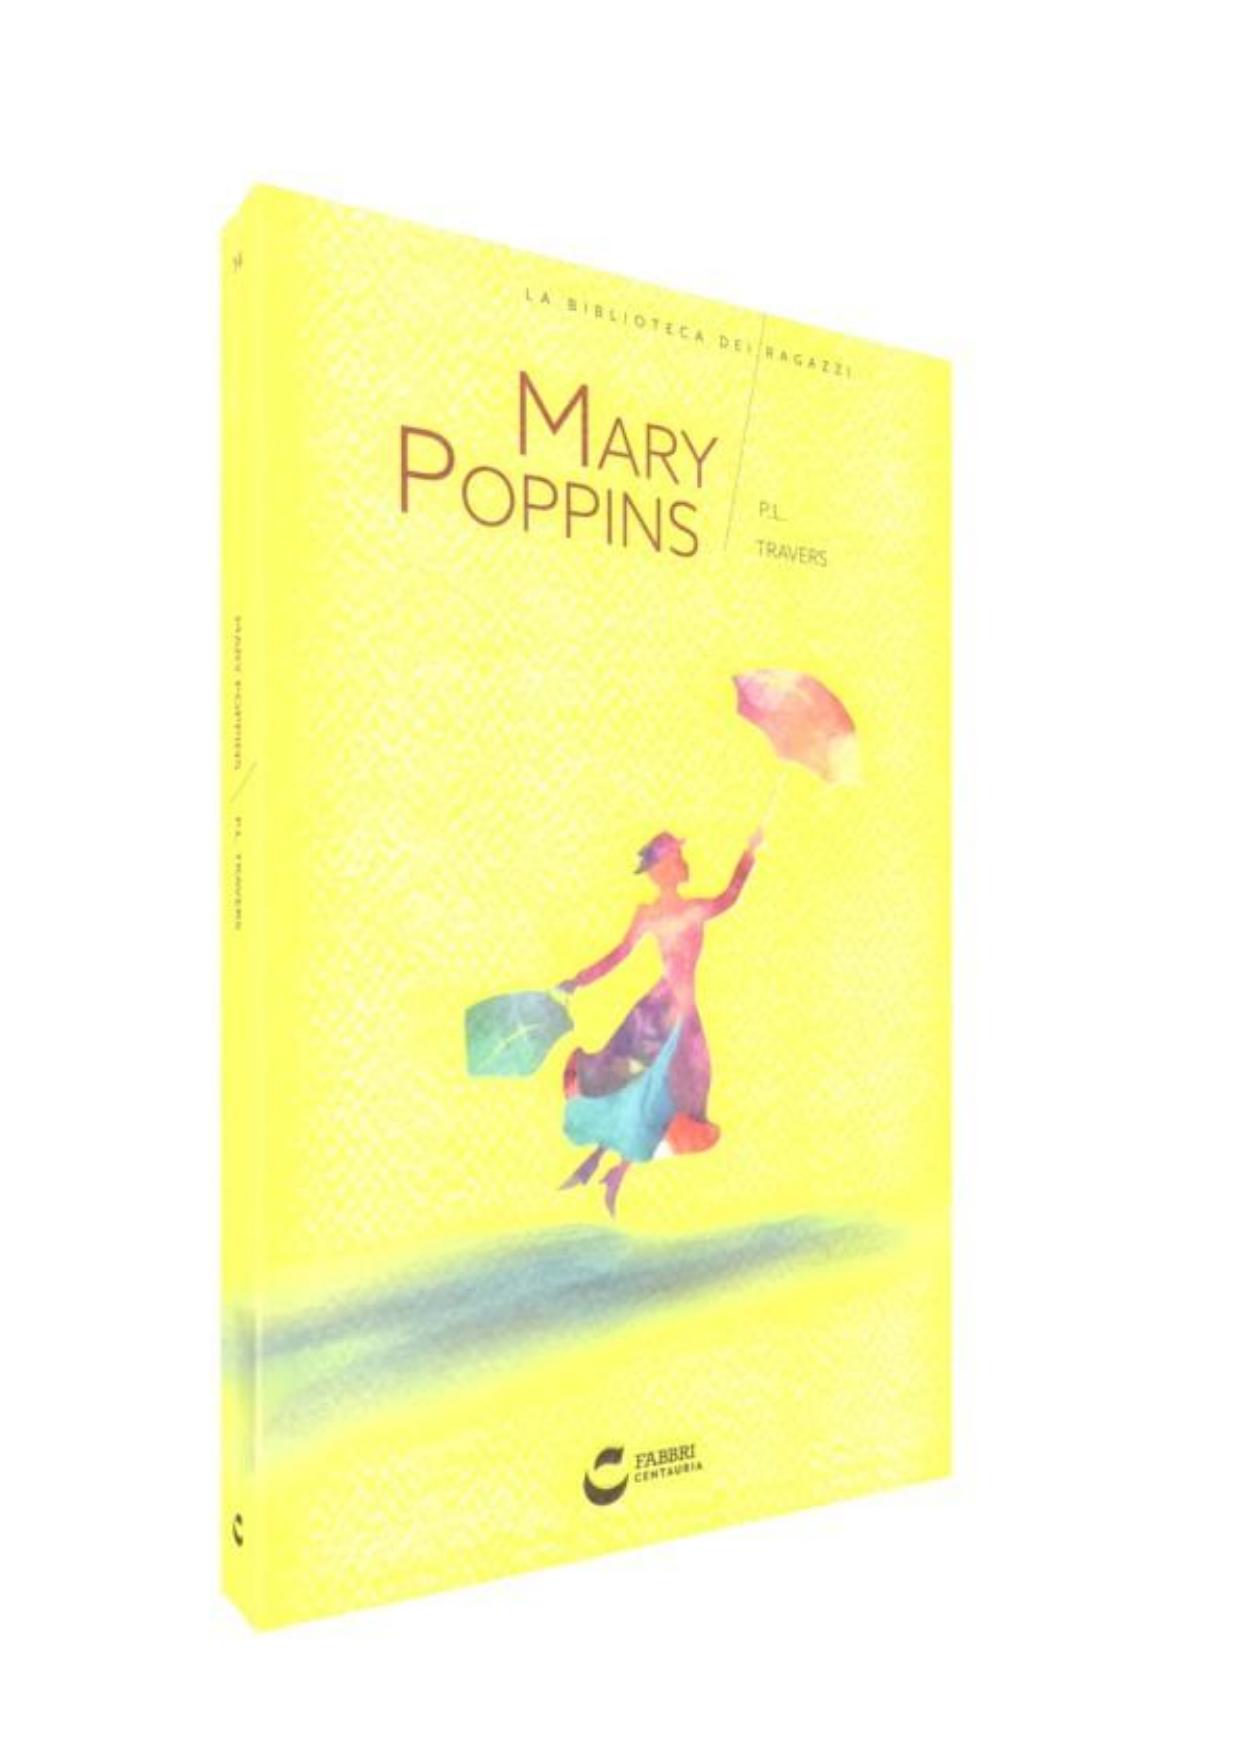 Mary Poppins by Pamela Lyndon Travers